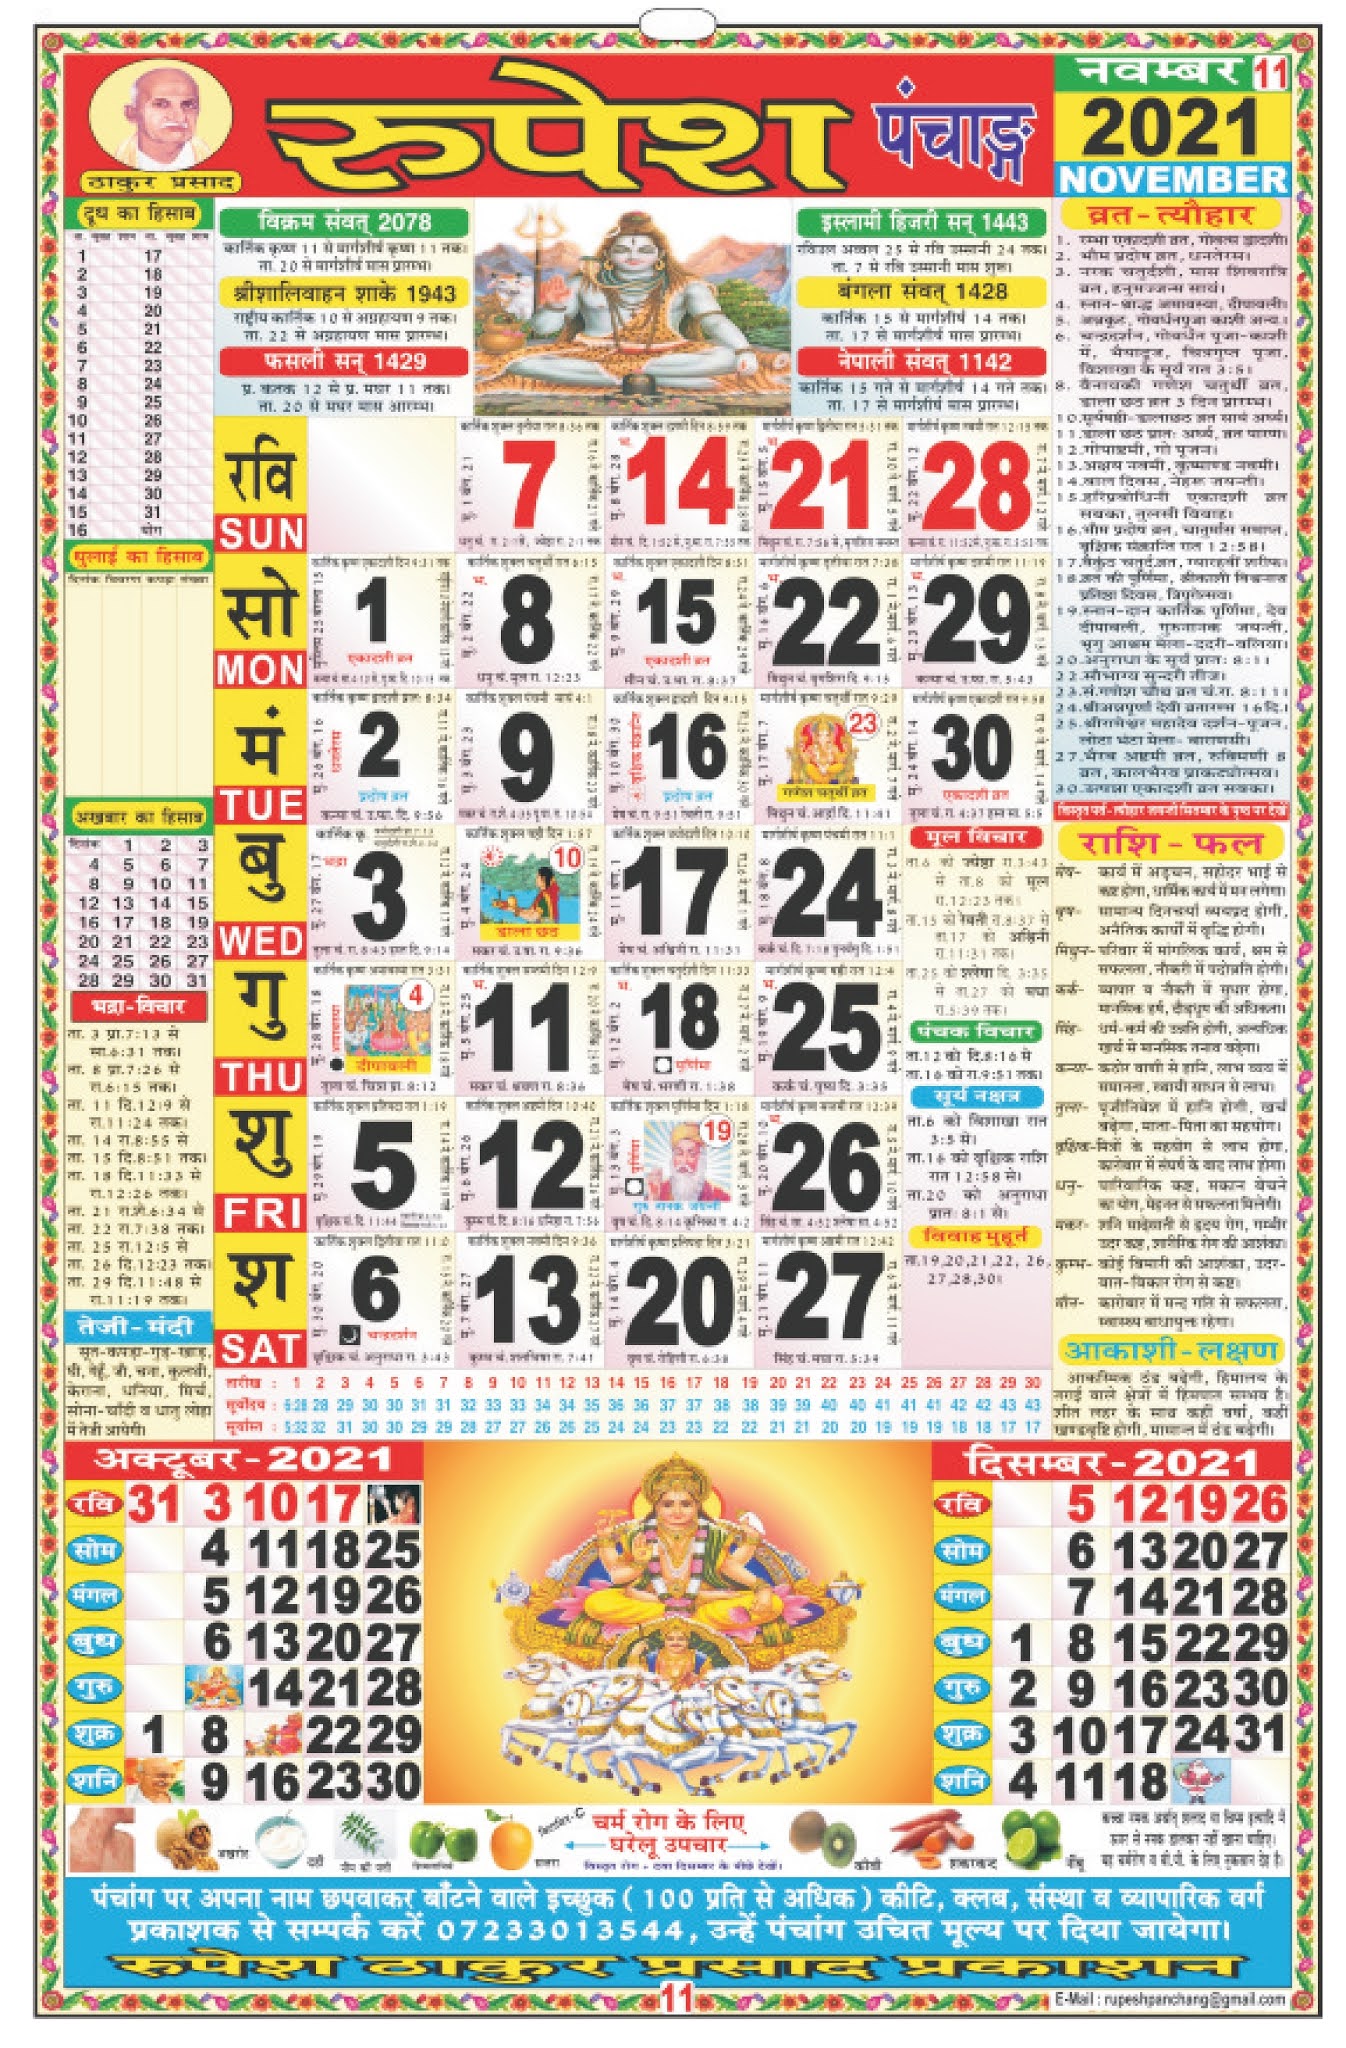 2024-calendar-with-holidays-thakur-prasad-latest-top-most-popular-incredible-lunar-events